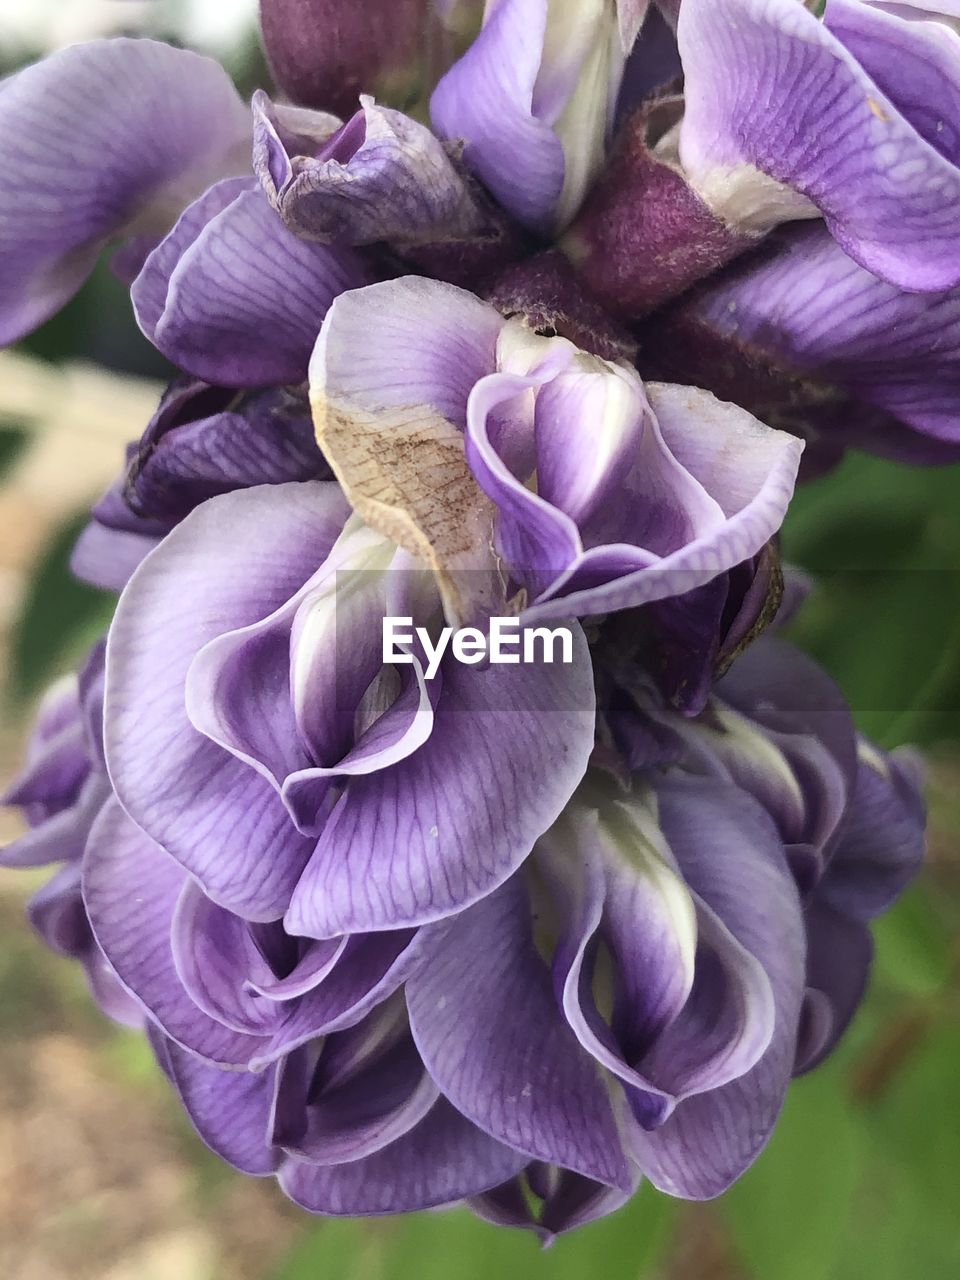 Intricate purple flower blooms